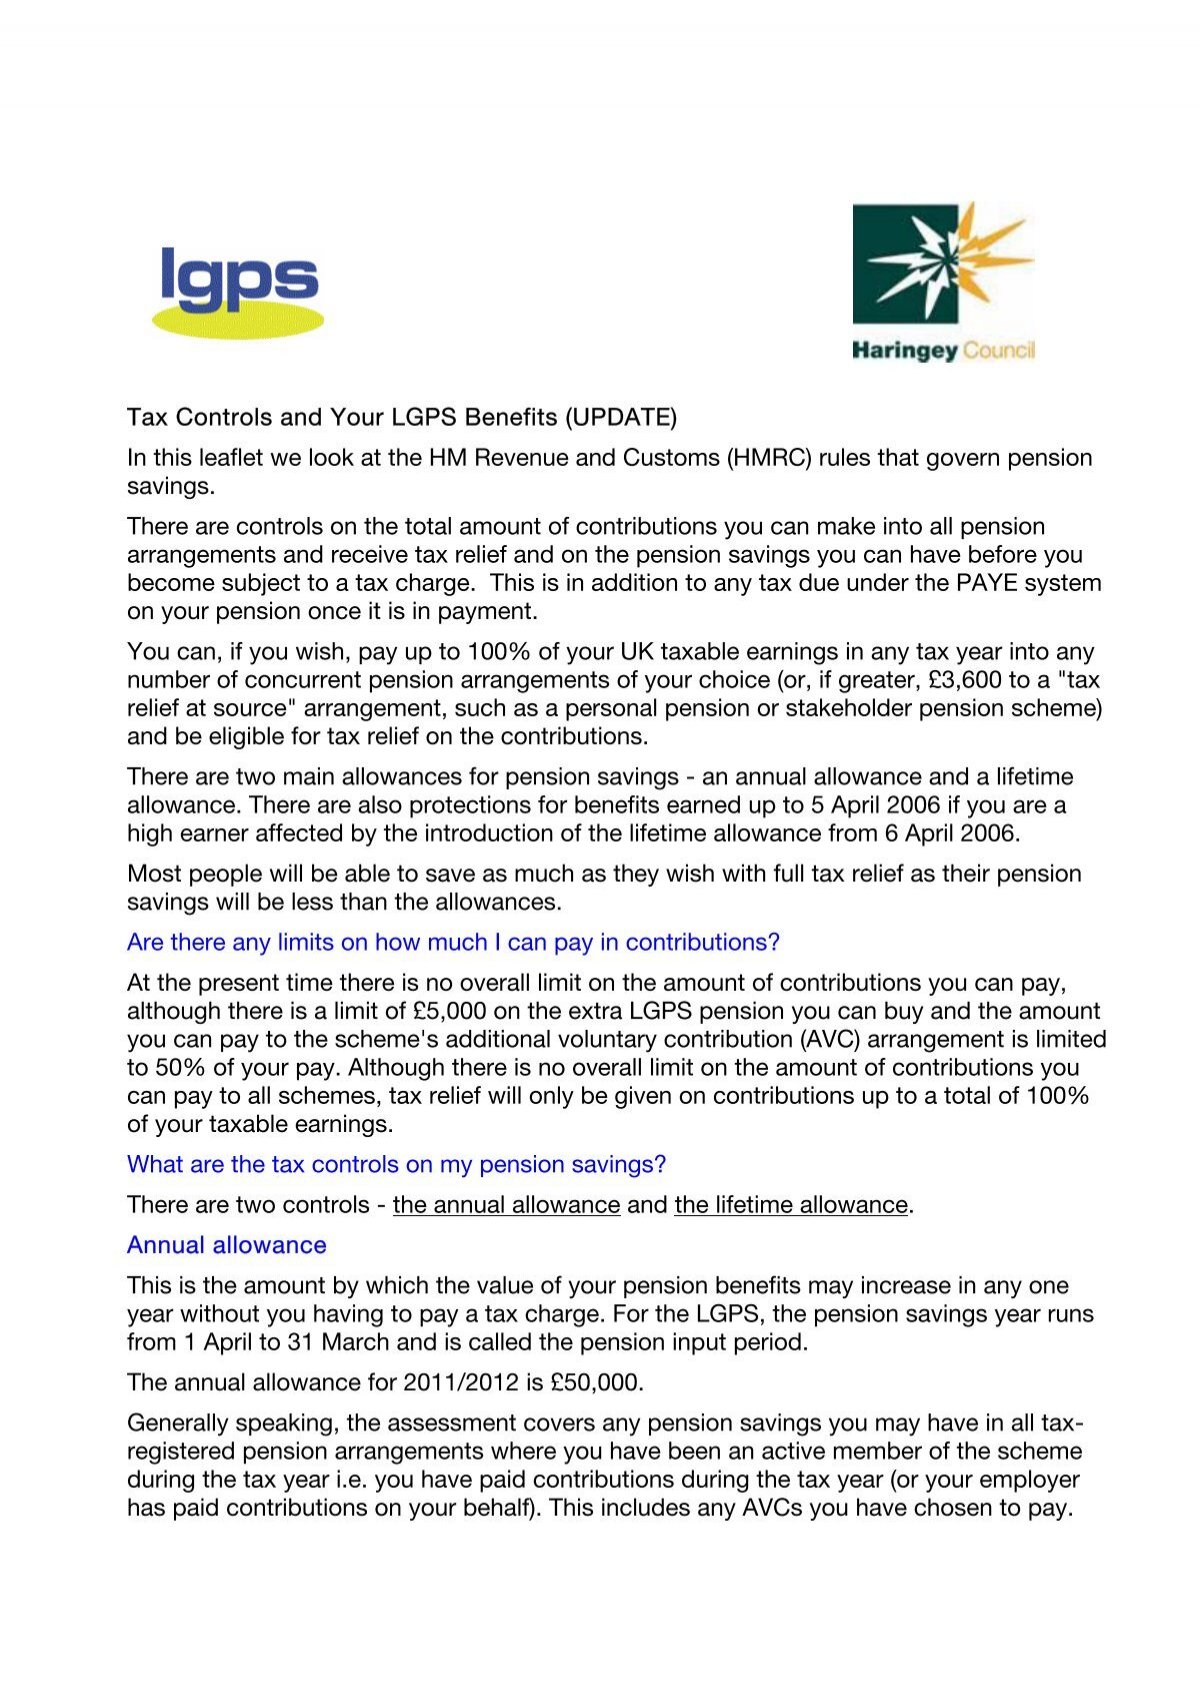 hmrc-tax-controls-and-lgps-benefits-jan-2012-haringey-council